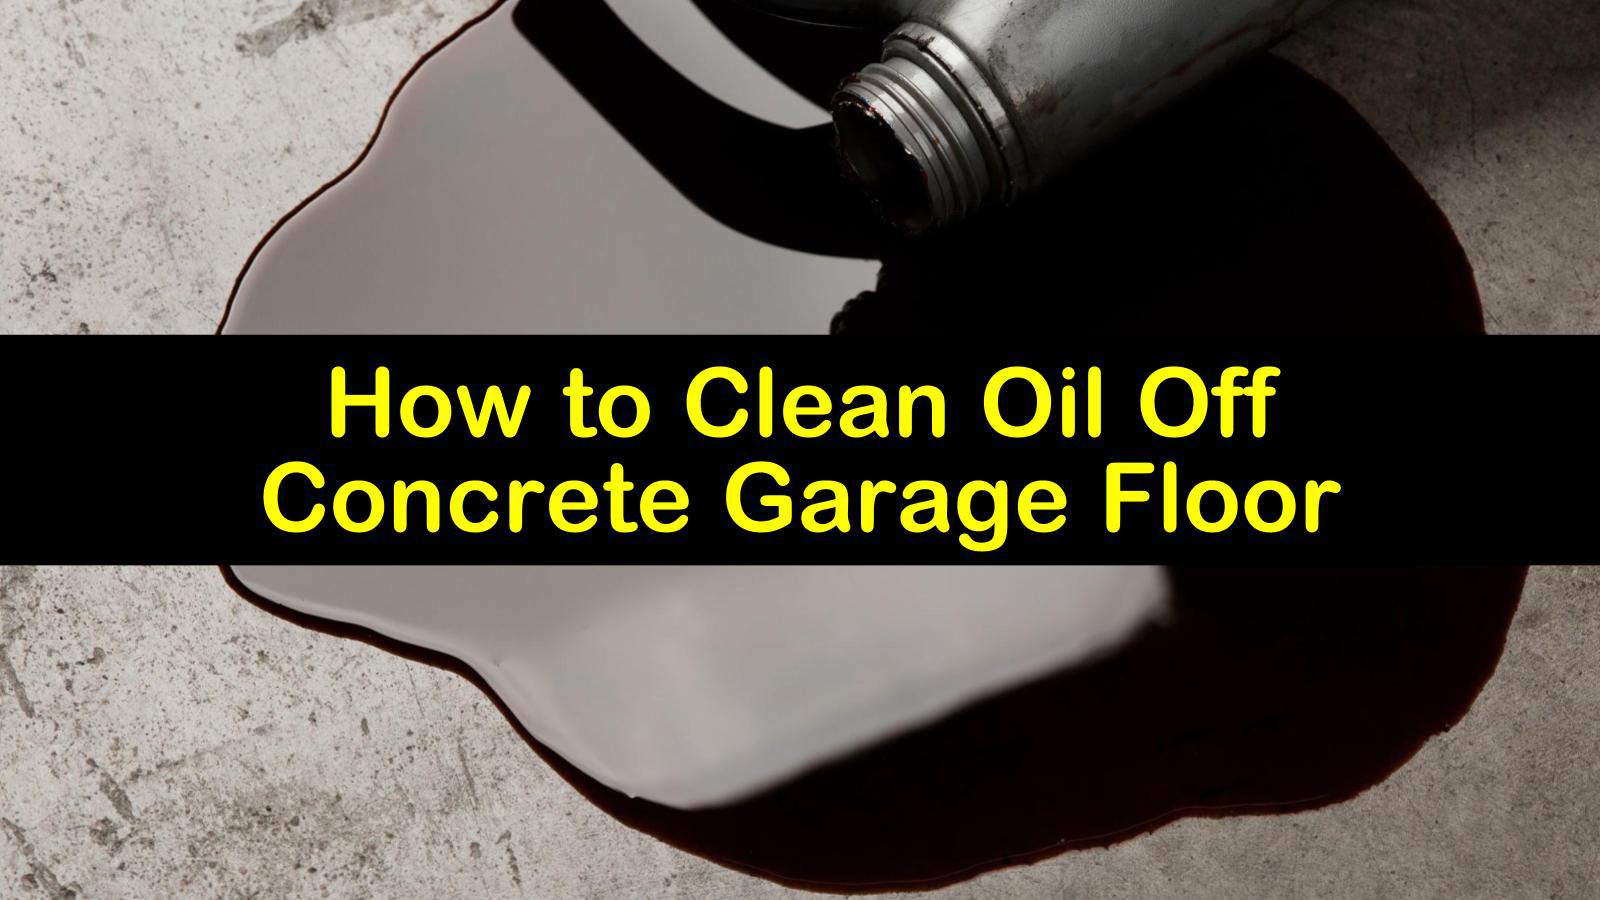 how to clean oil off concrete garage floor titleimg1